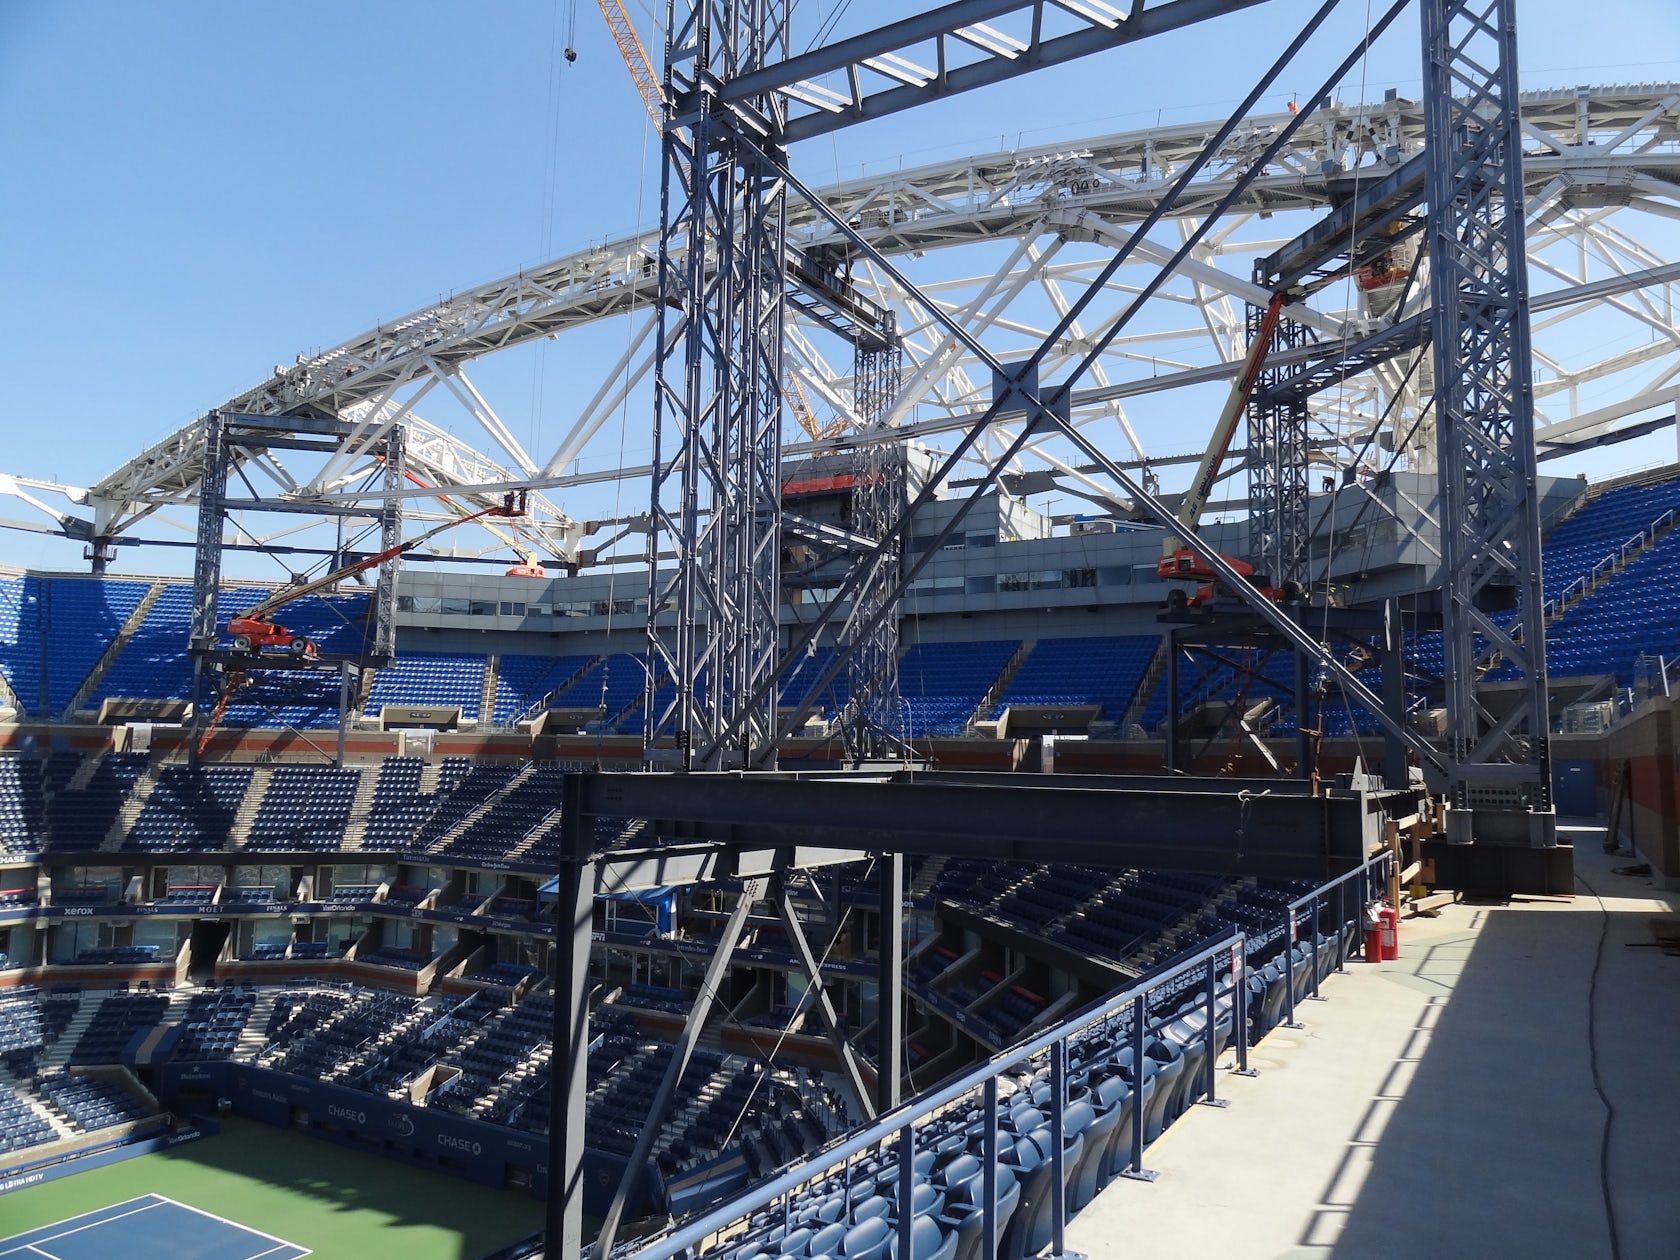 US Open 2016: Arthur Ashe Stadium new retractable roof - Sports Illustrated